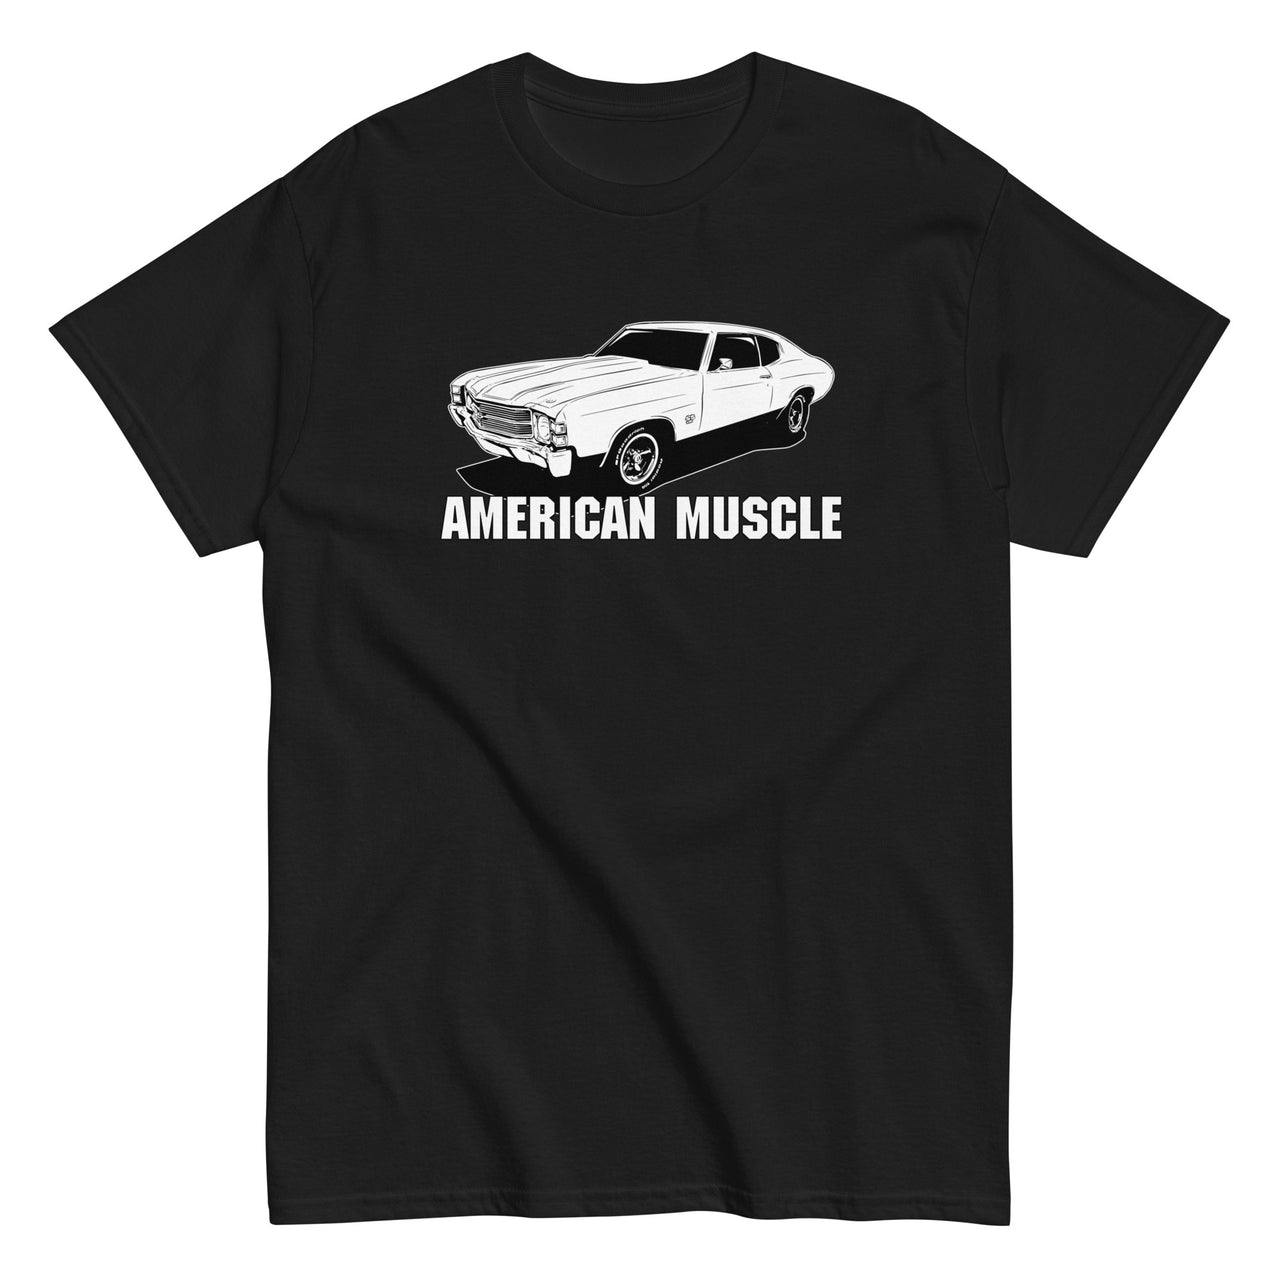 1971 Chevelle T-Shirt in black